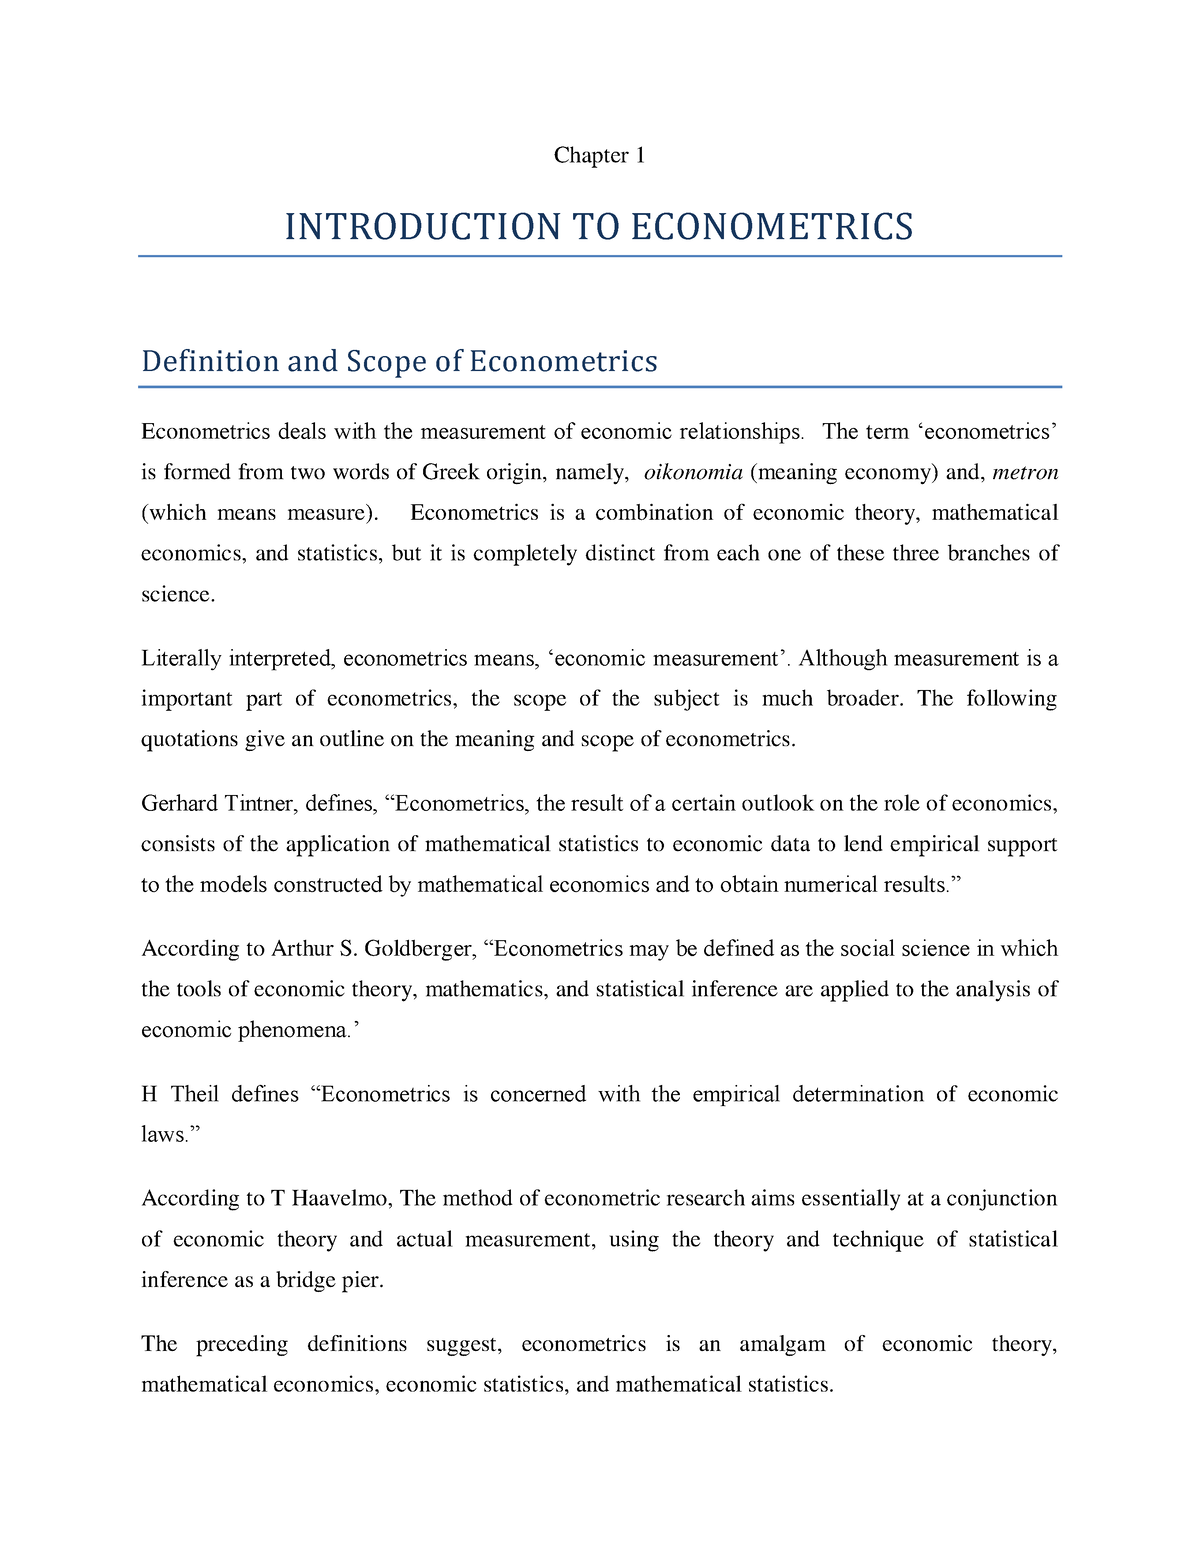 econometrics dissertation